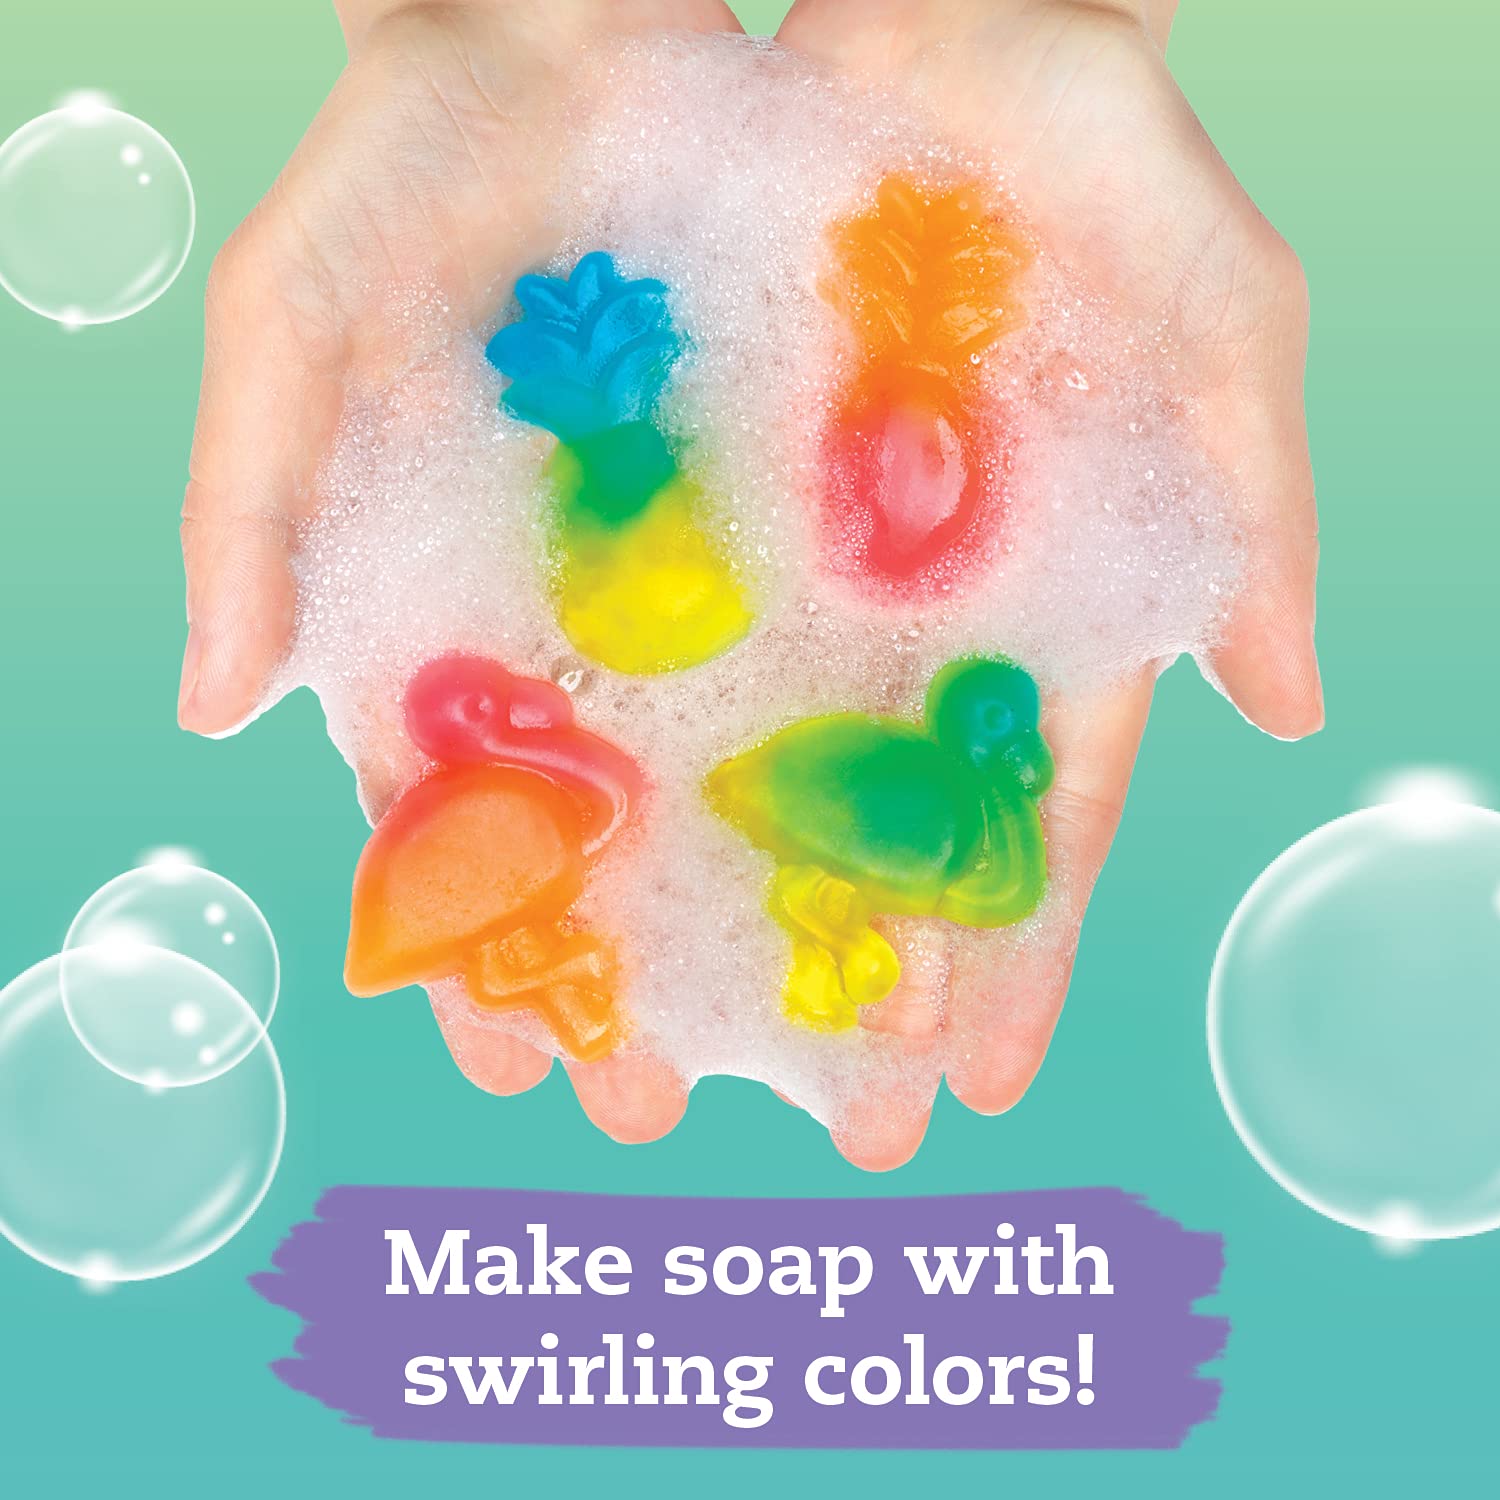 Klutz: Tropical Tie-Dye Soap